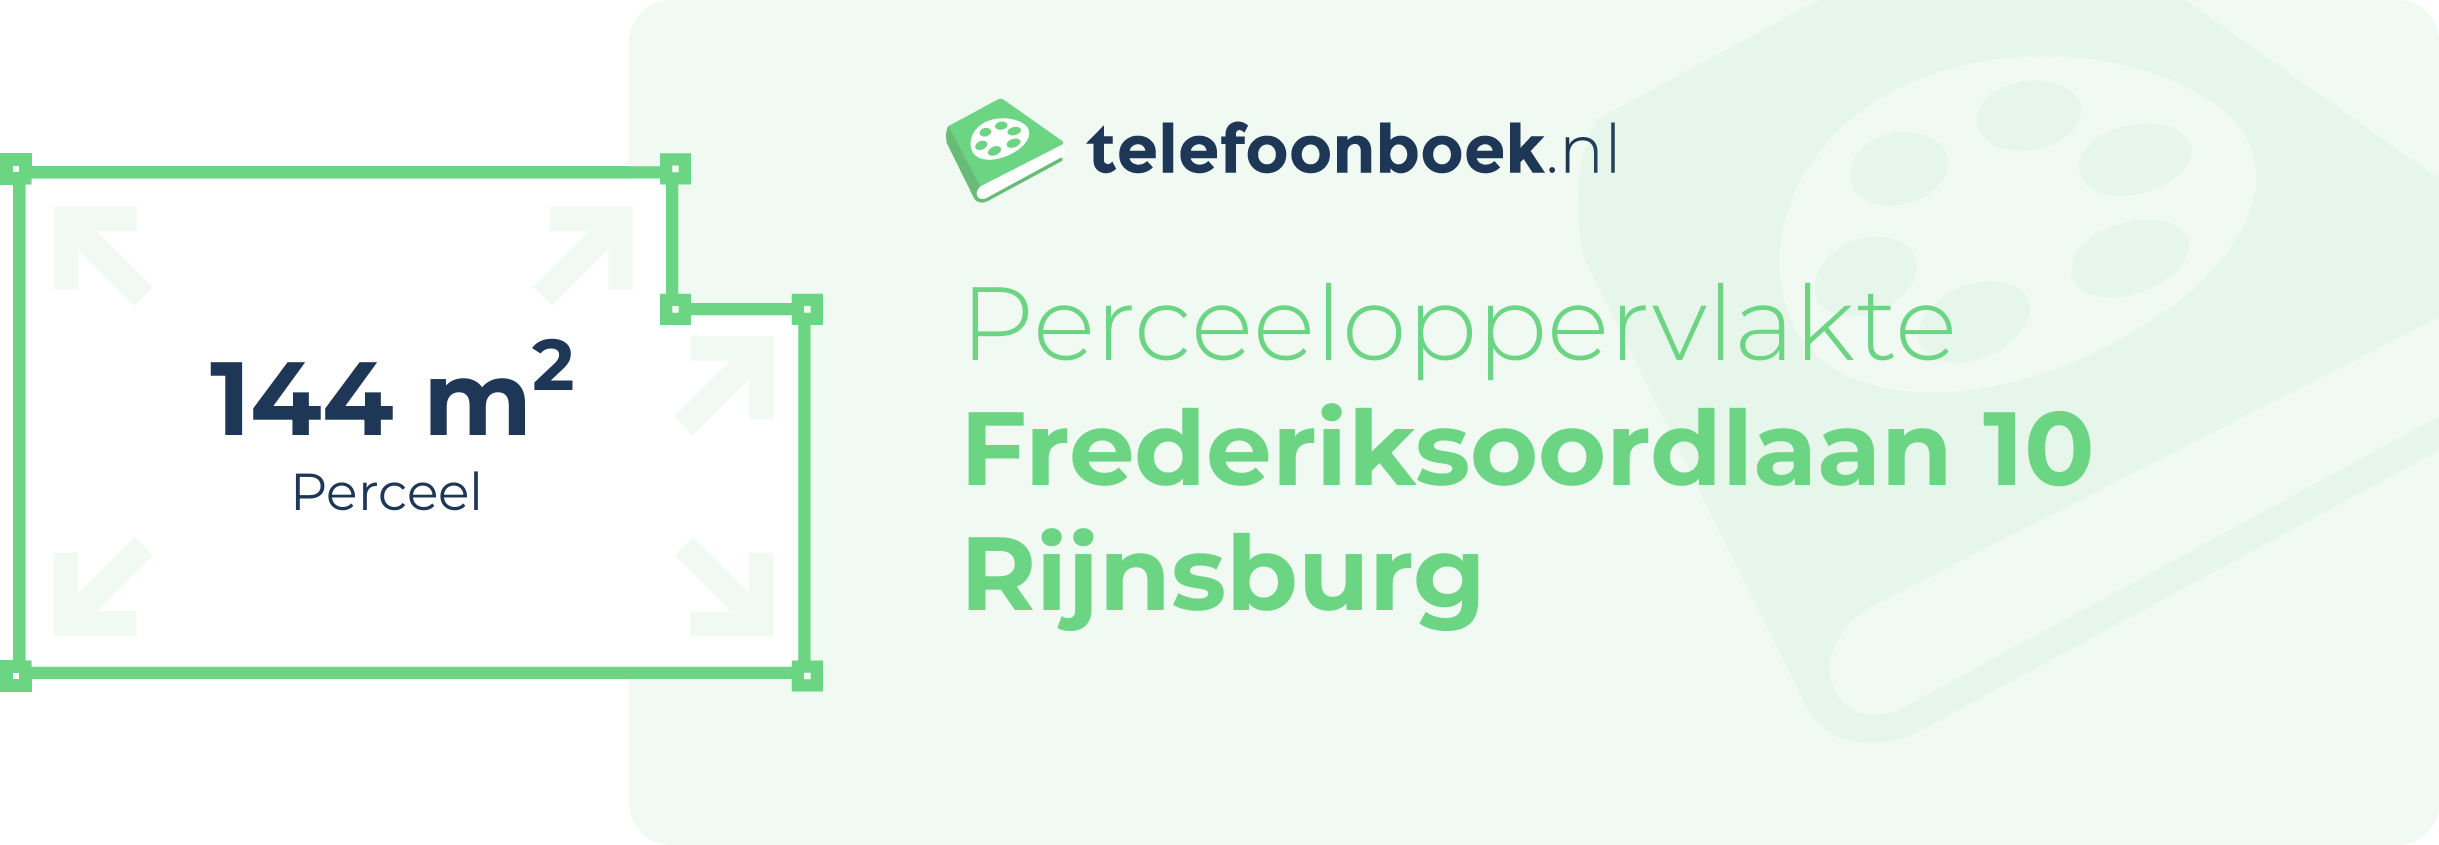 Perceeloppervlakte Frederiksoordlaan 10 Rijnsburg